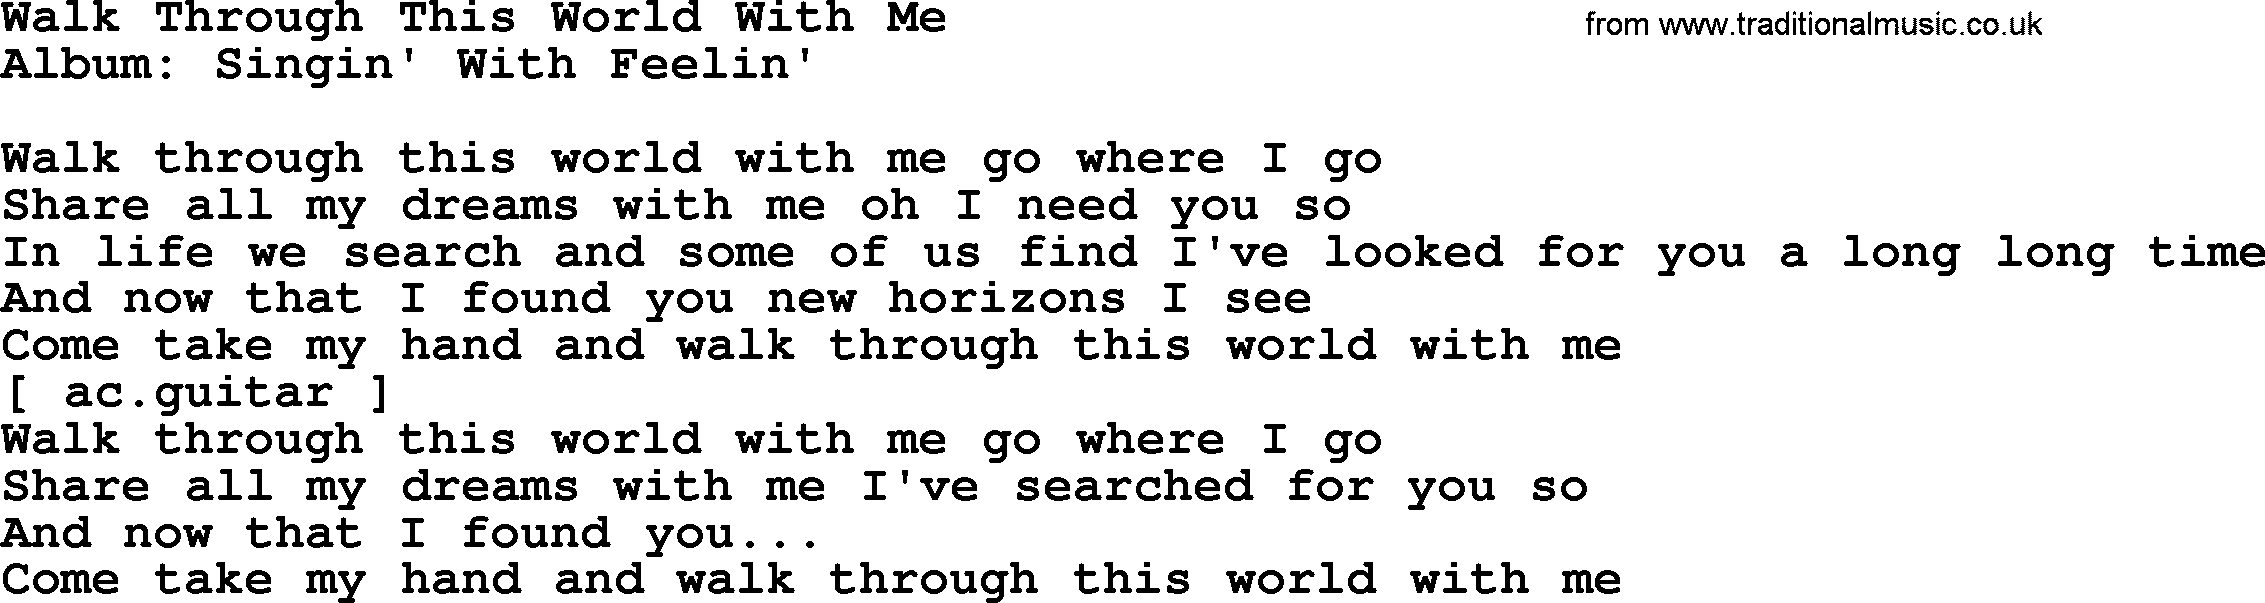 Loretta Lynn song: Walk Through This World With Me lyrics